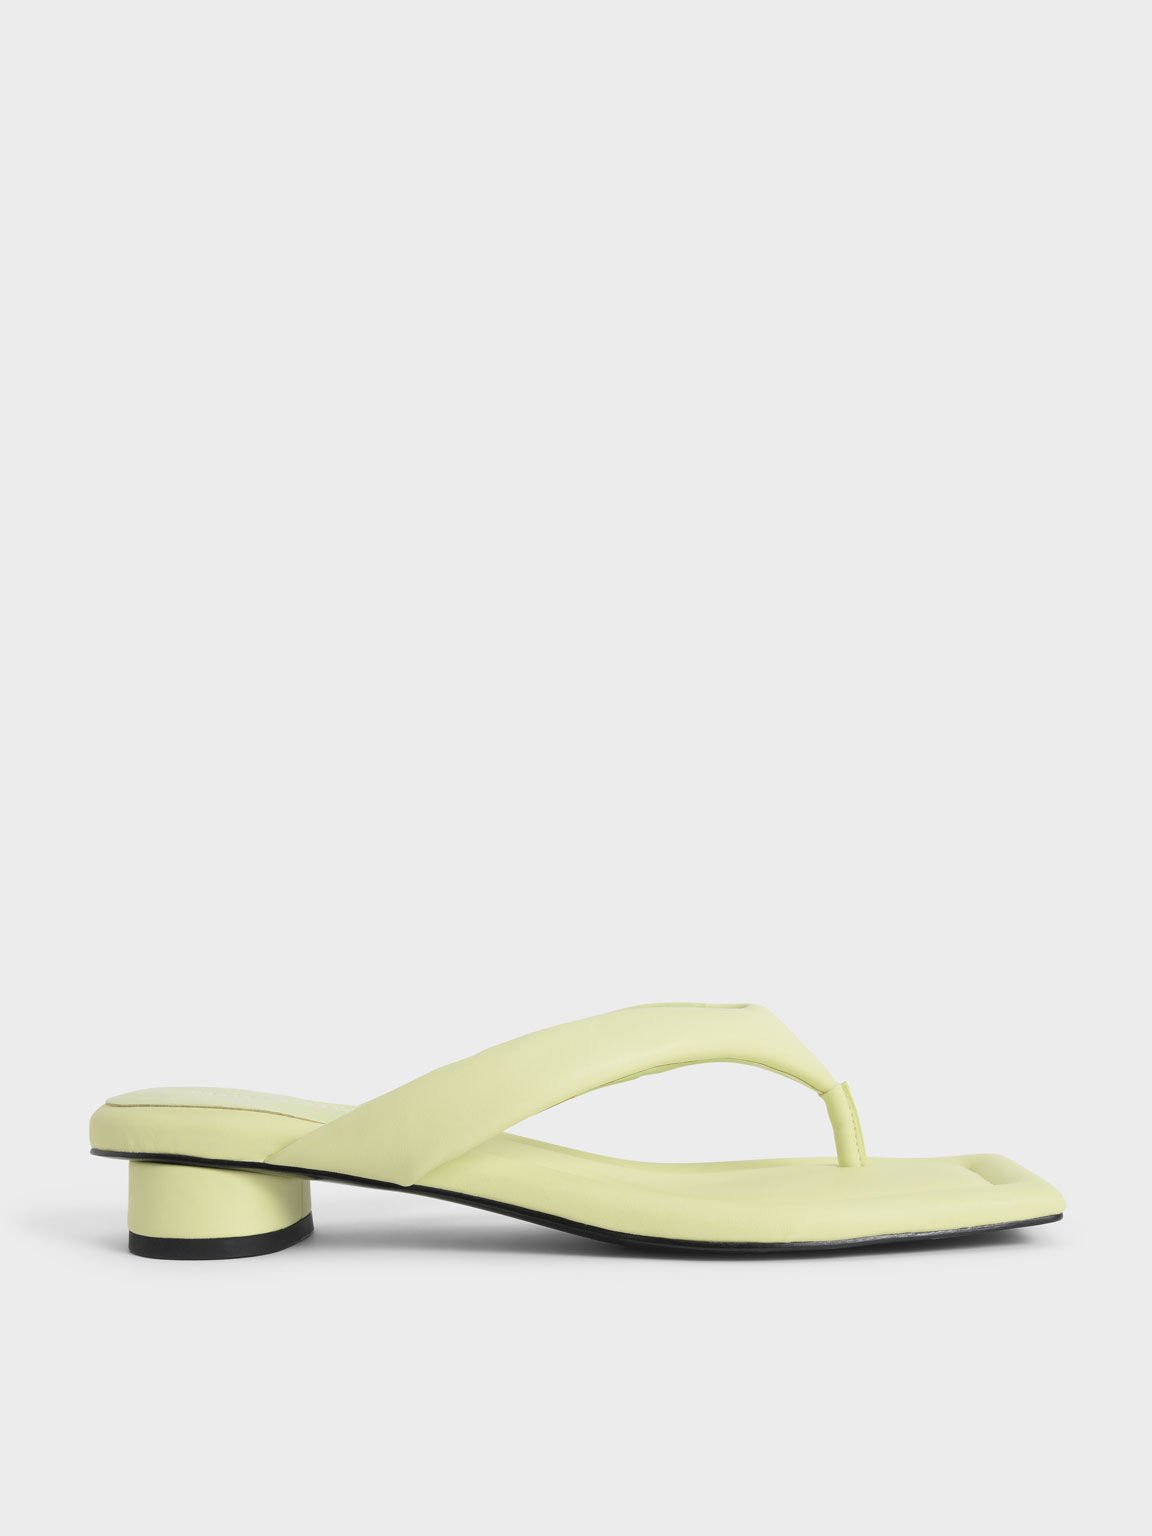 Sandal Padded Thong, Yellow, hi-res